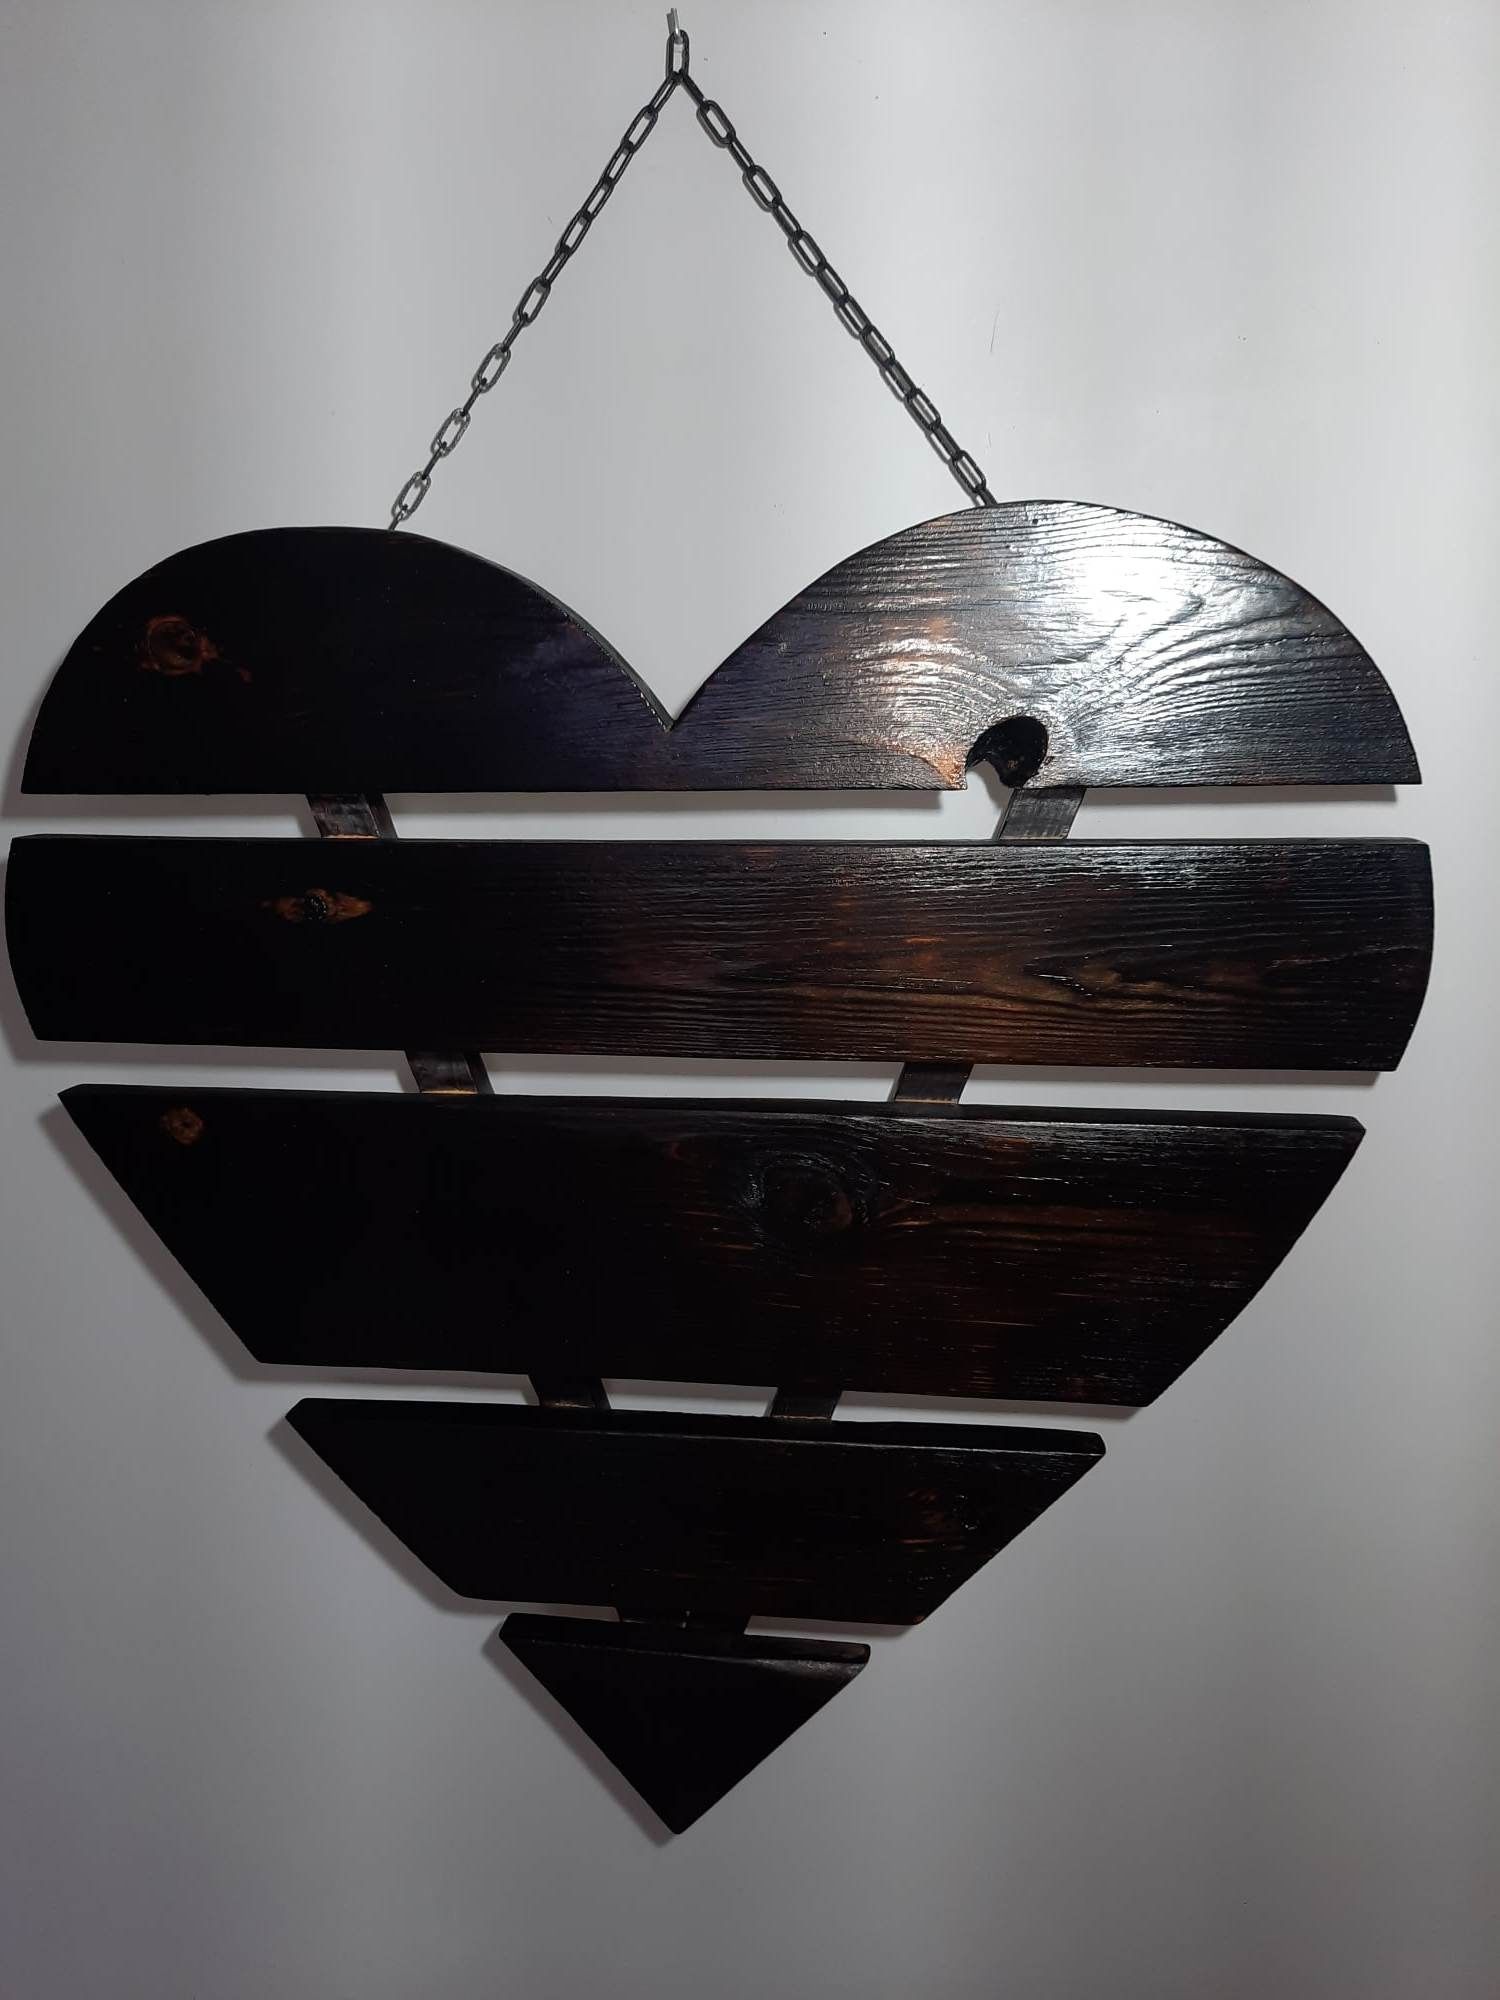 Serce z drewna opalanego,handmade